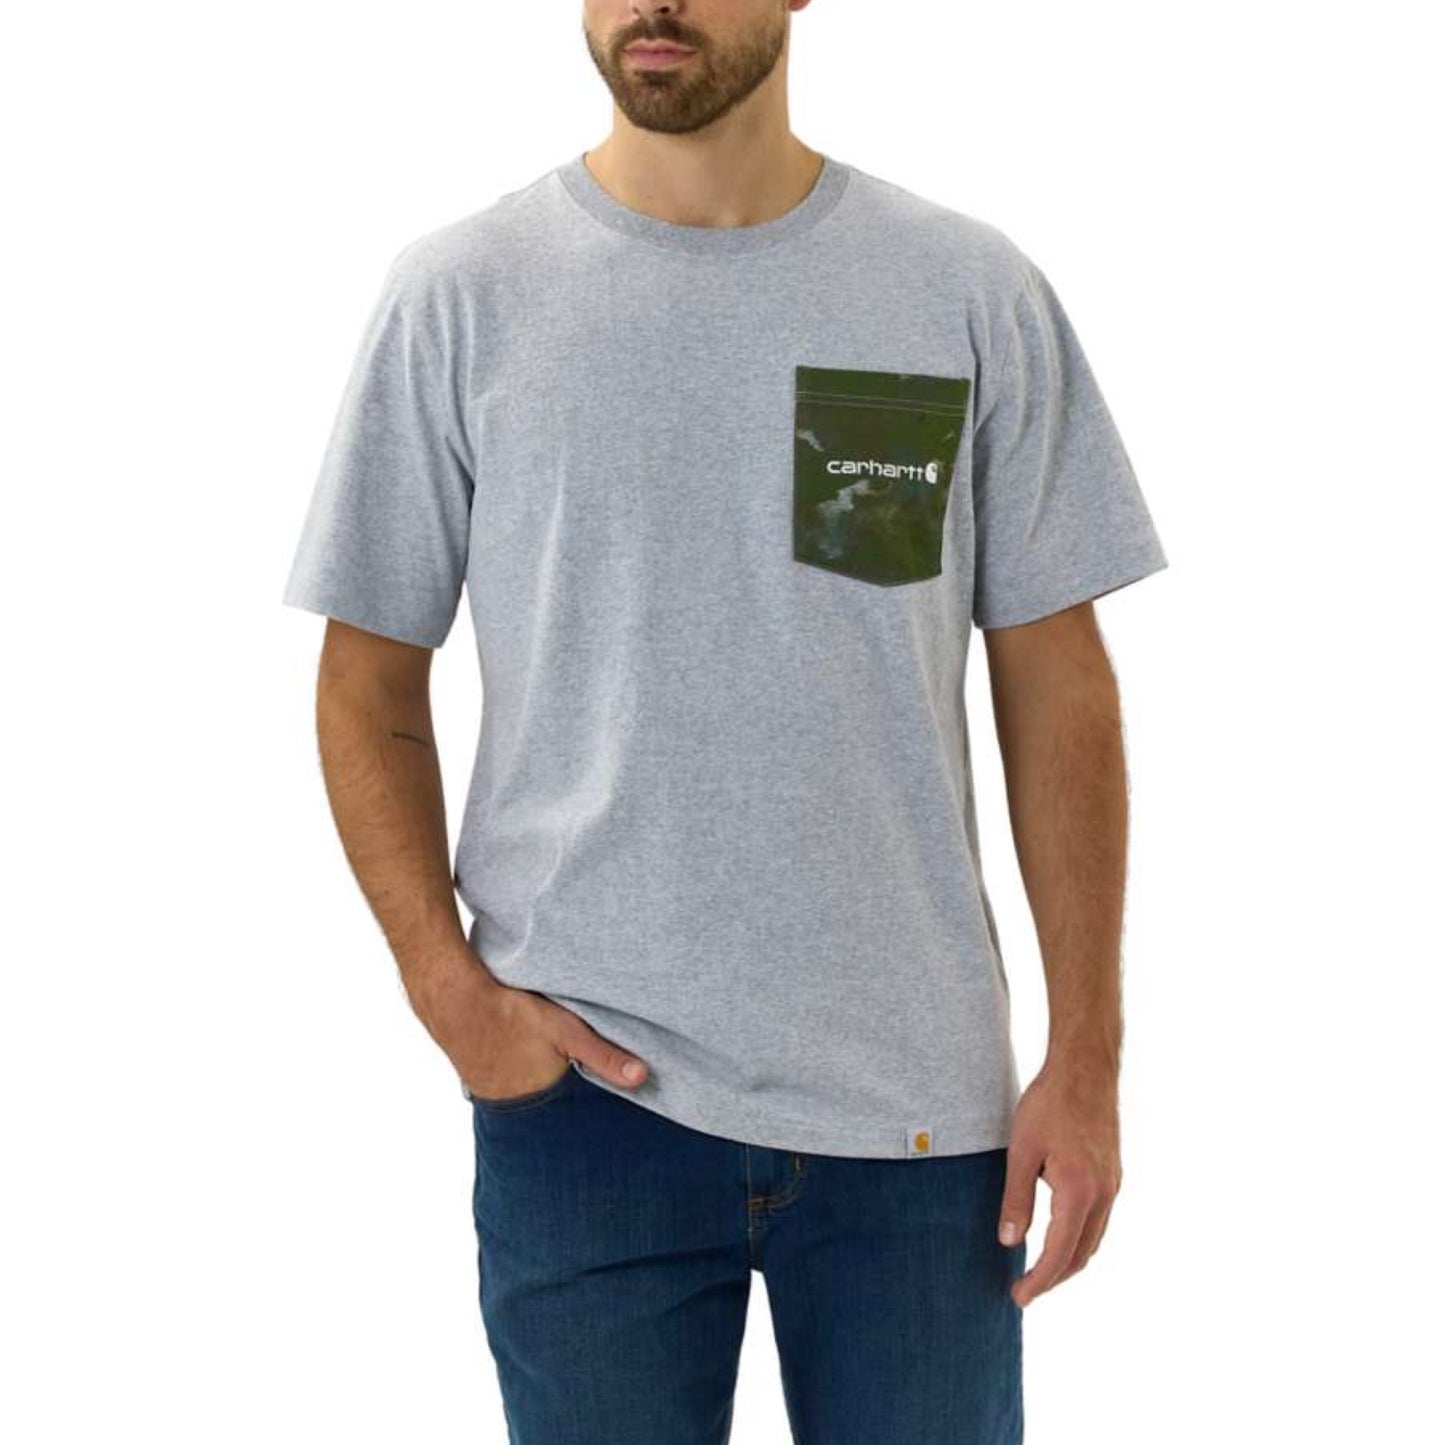 Carhartt Pocket T-Shirt mit Camo Muster Hellgrau 105352